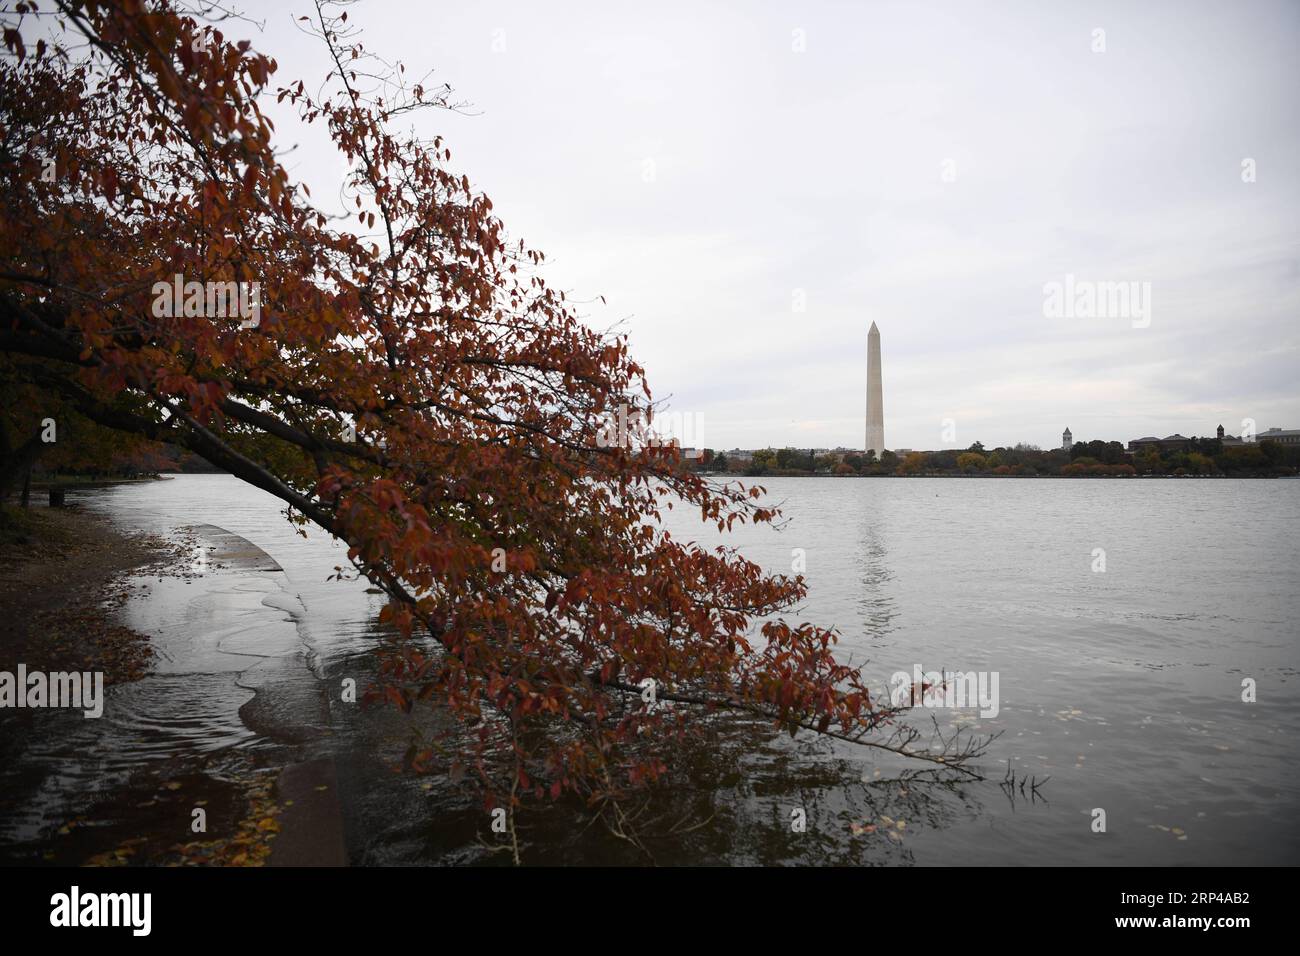 (181101) -- WASHINGTON, 1. November 2018 -- das Washington Monument wird am Seeufer des Tidal Basin in Washington D.C., USA, am 1. November 2018 gesehen. ) U.S.-WASHINGTON D.C.-TIDAL BASIN-HERBSTLIUXJIE PUBLICATIONXNOTXINXCHN Stockfoto